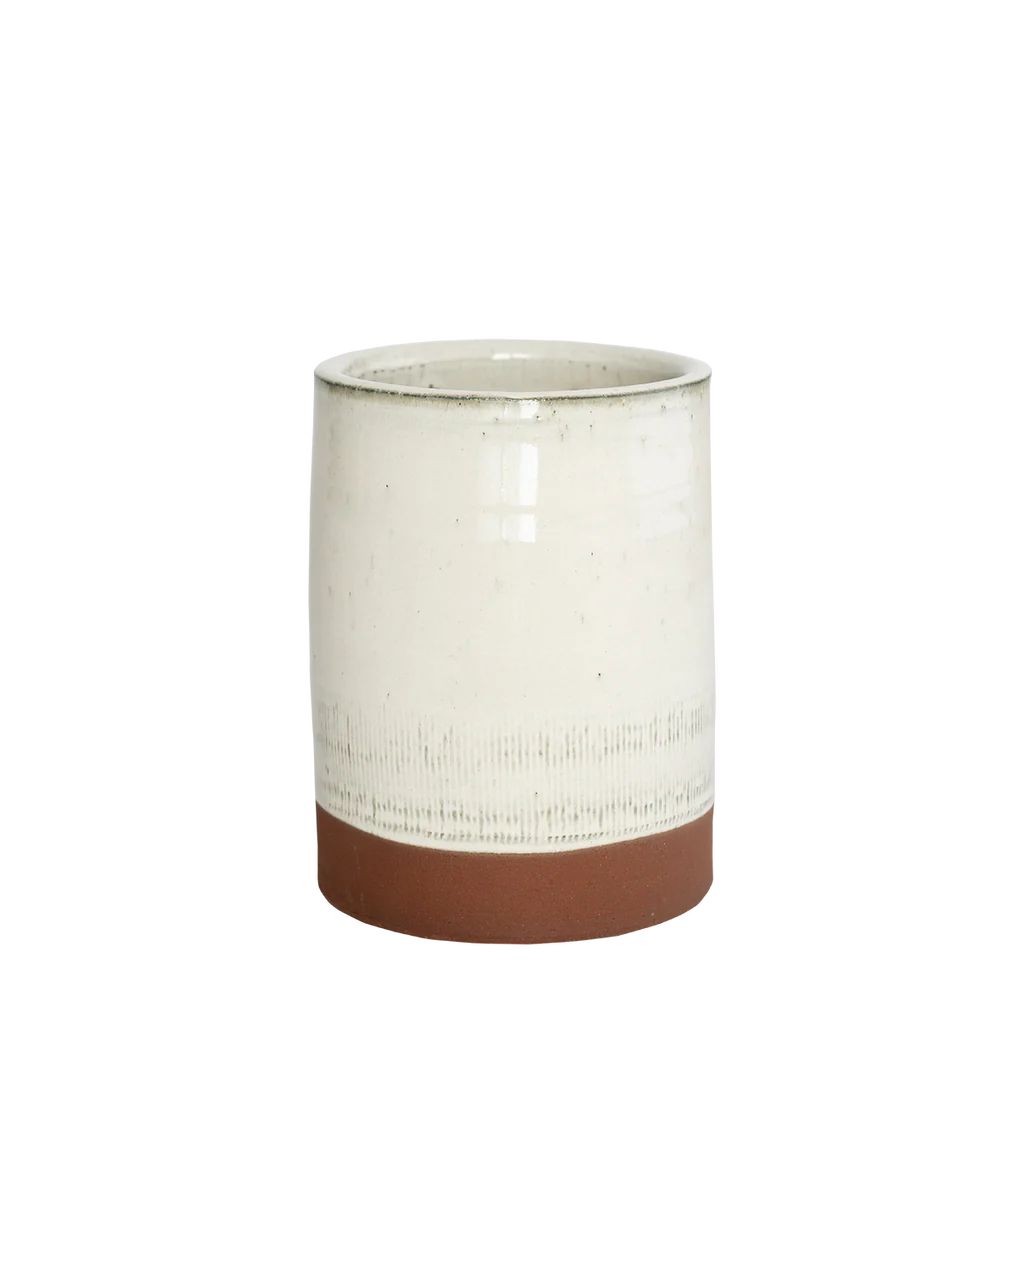 Dipped Ceramic Vase | McGee & Co.